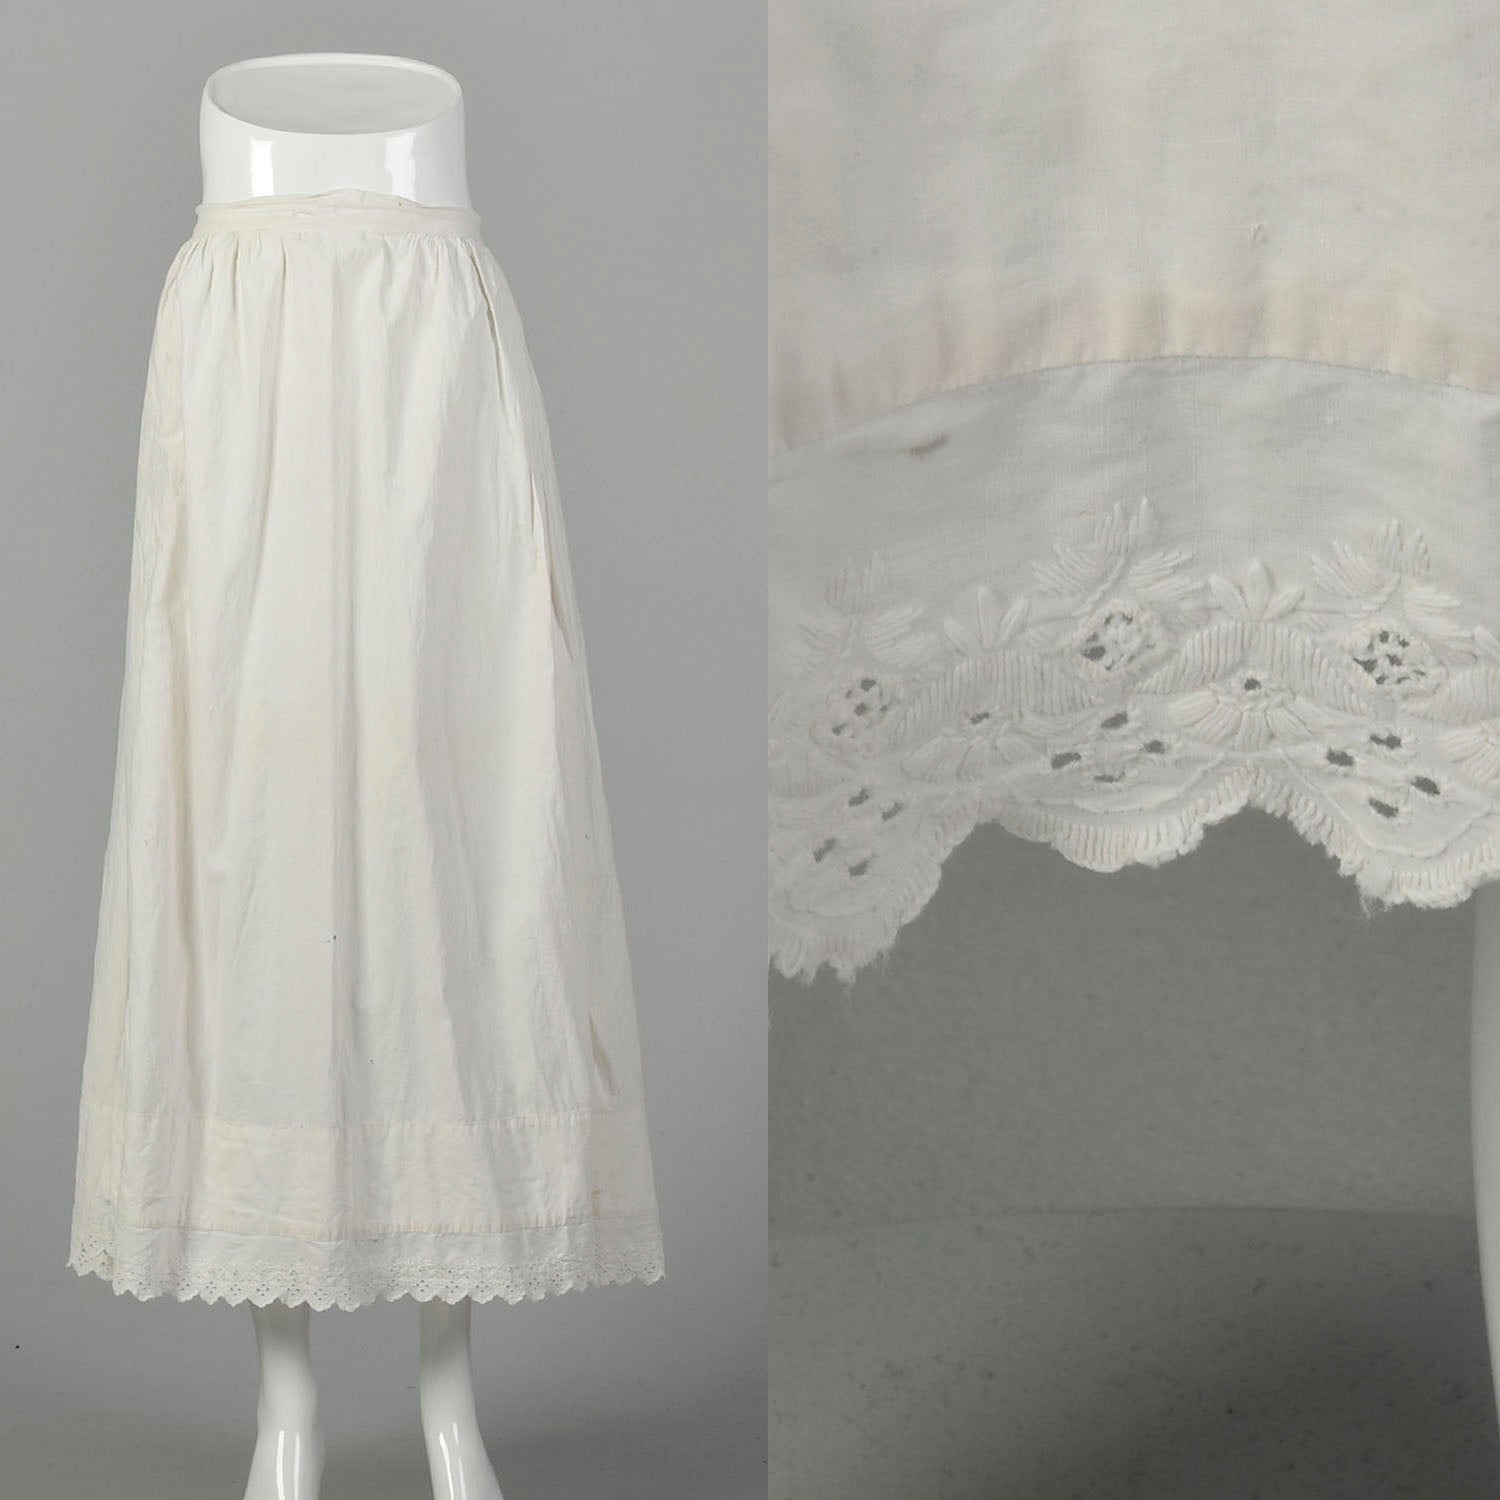 Medium 1900s Skirt Victorian Cotton Slip White Petticoat